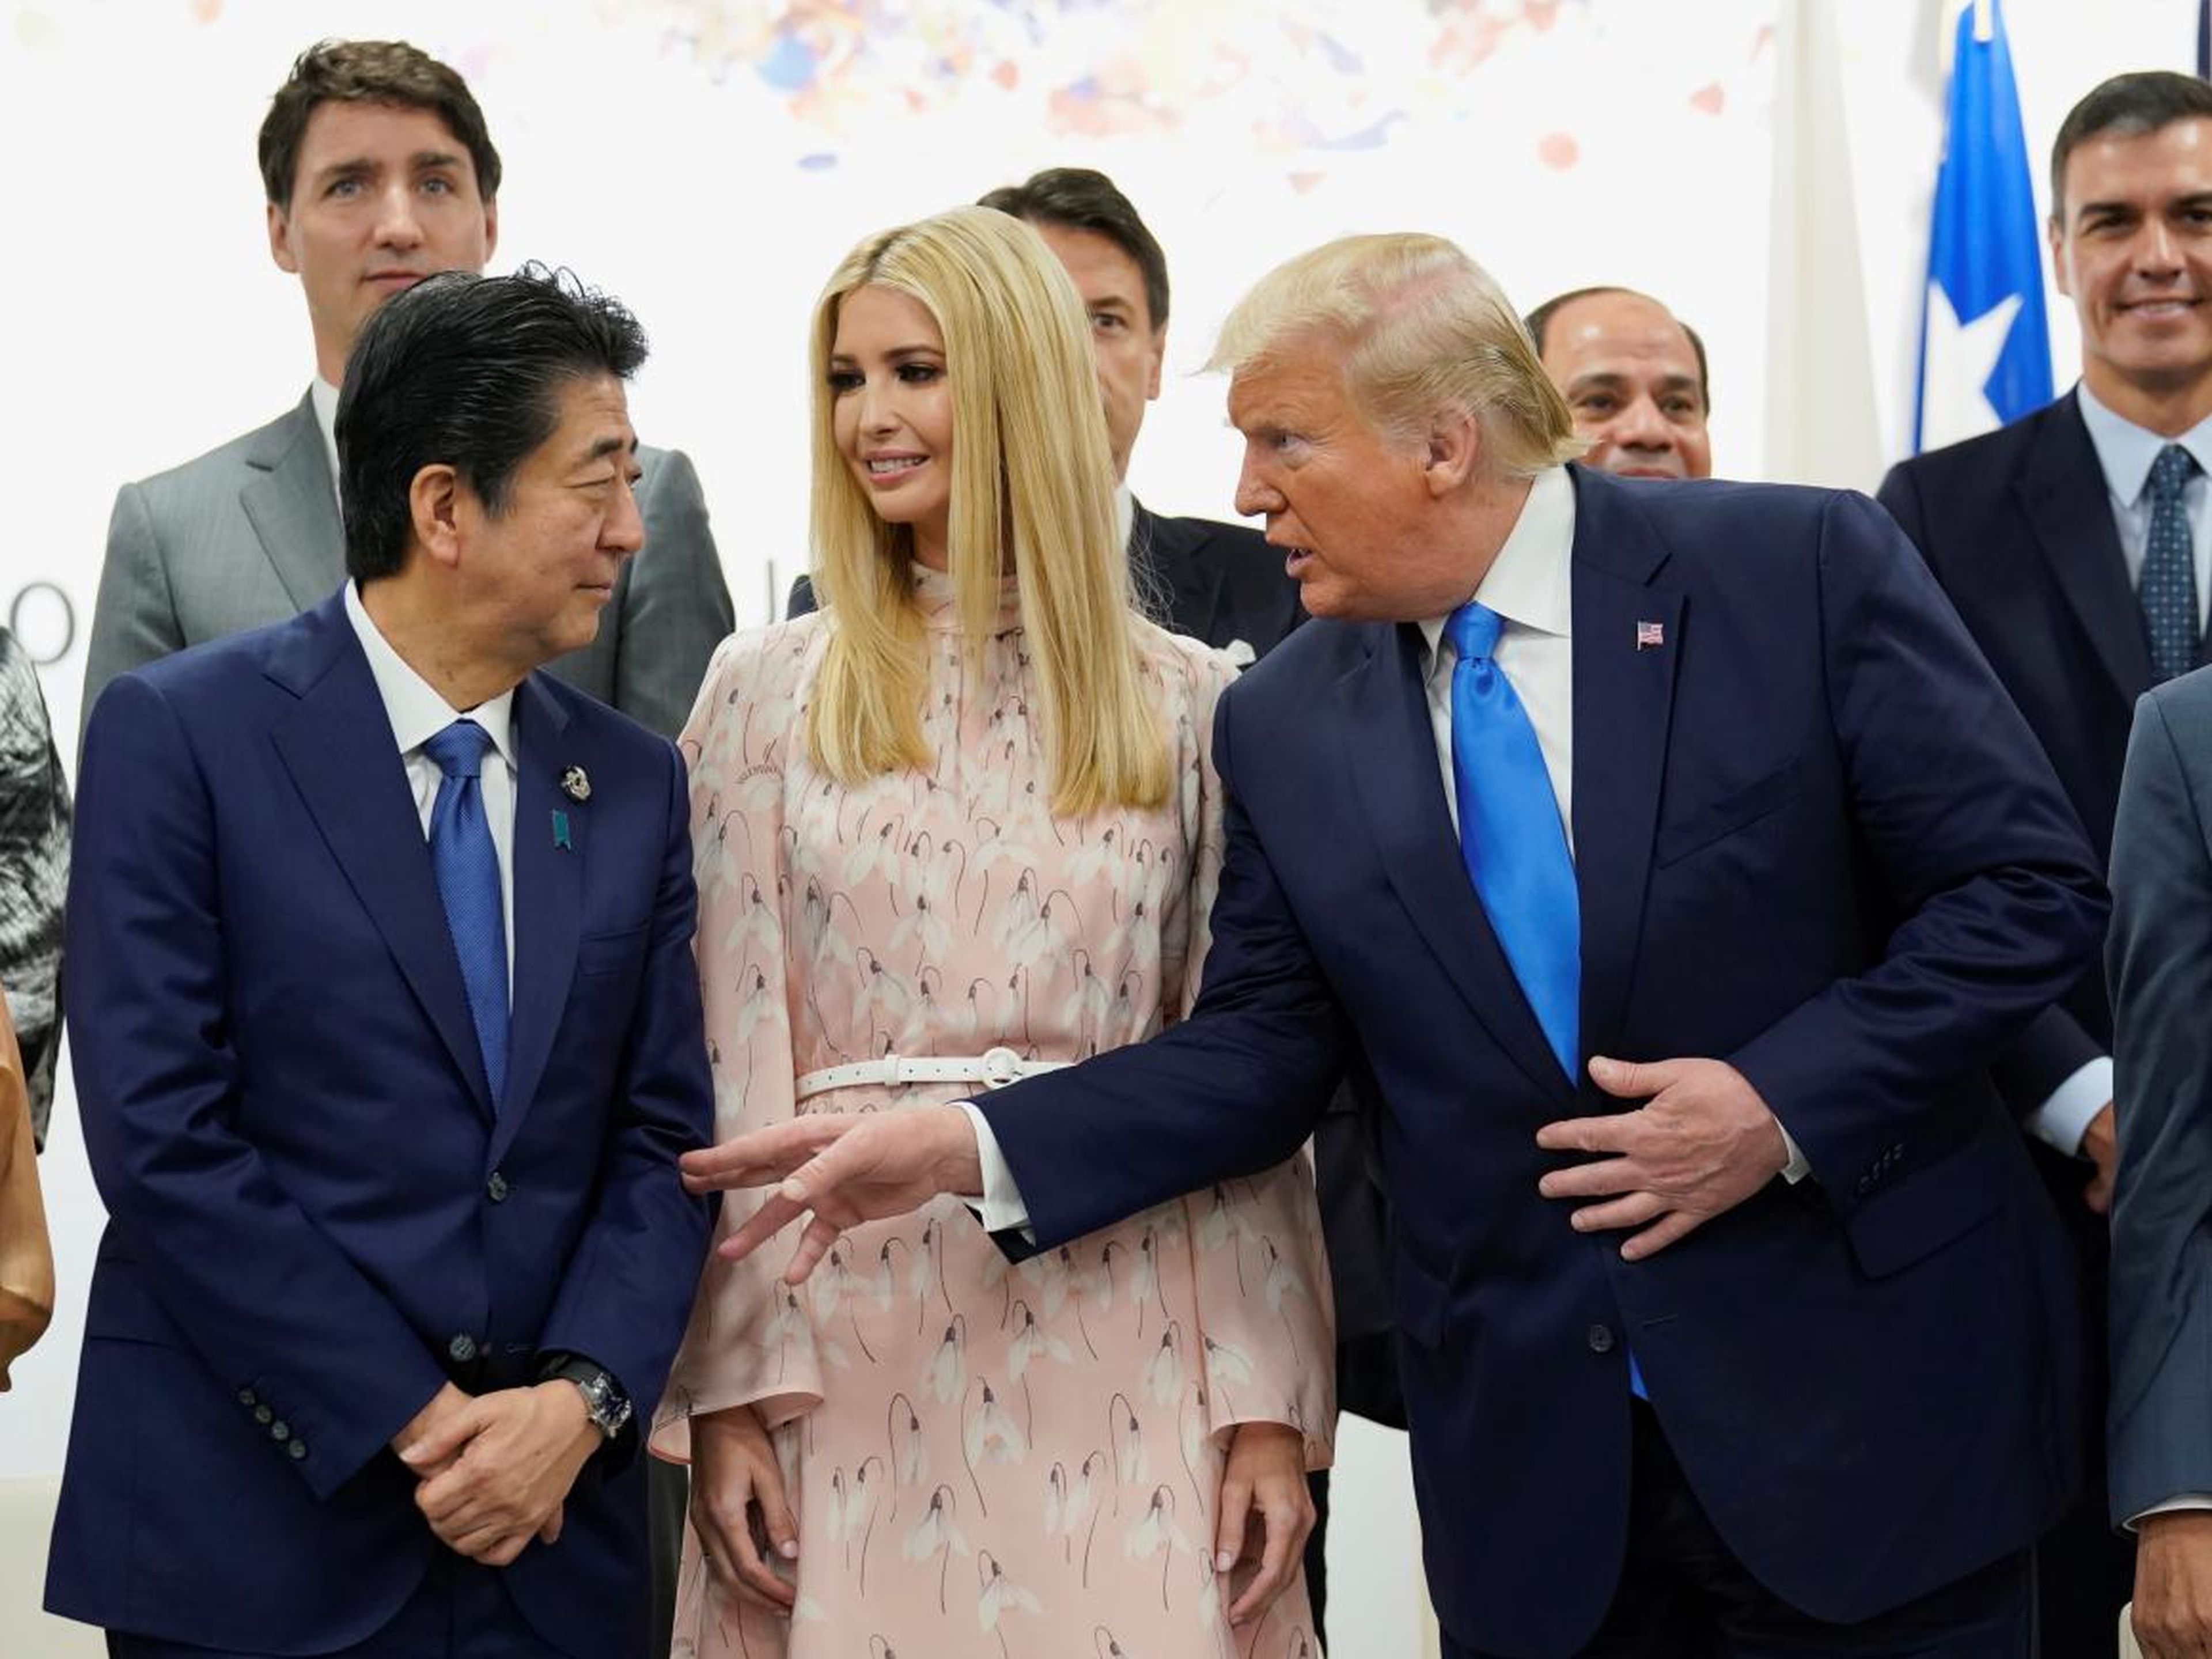 U.S. President Donald Trump speaks with Japan's Prime Minister Shinzo Abe as White House senior advisor Ivanka Trump looks on during a women's empowerment event during the G20 leaders summit in Osaka, Japan, June 29, 2019.